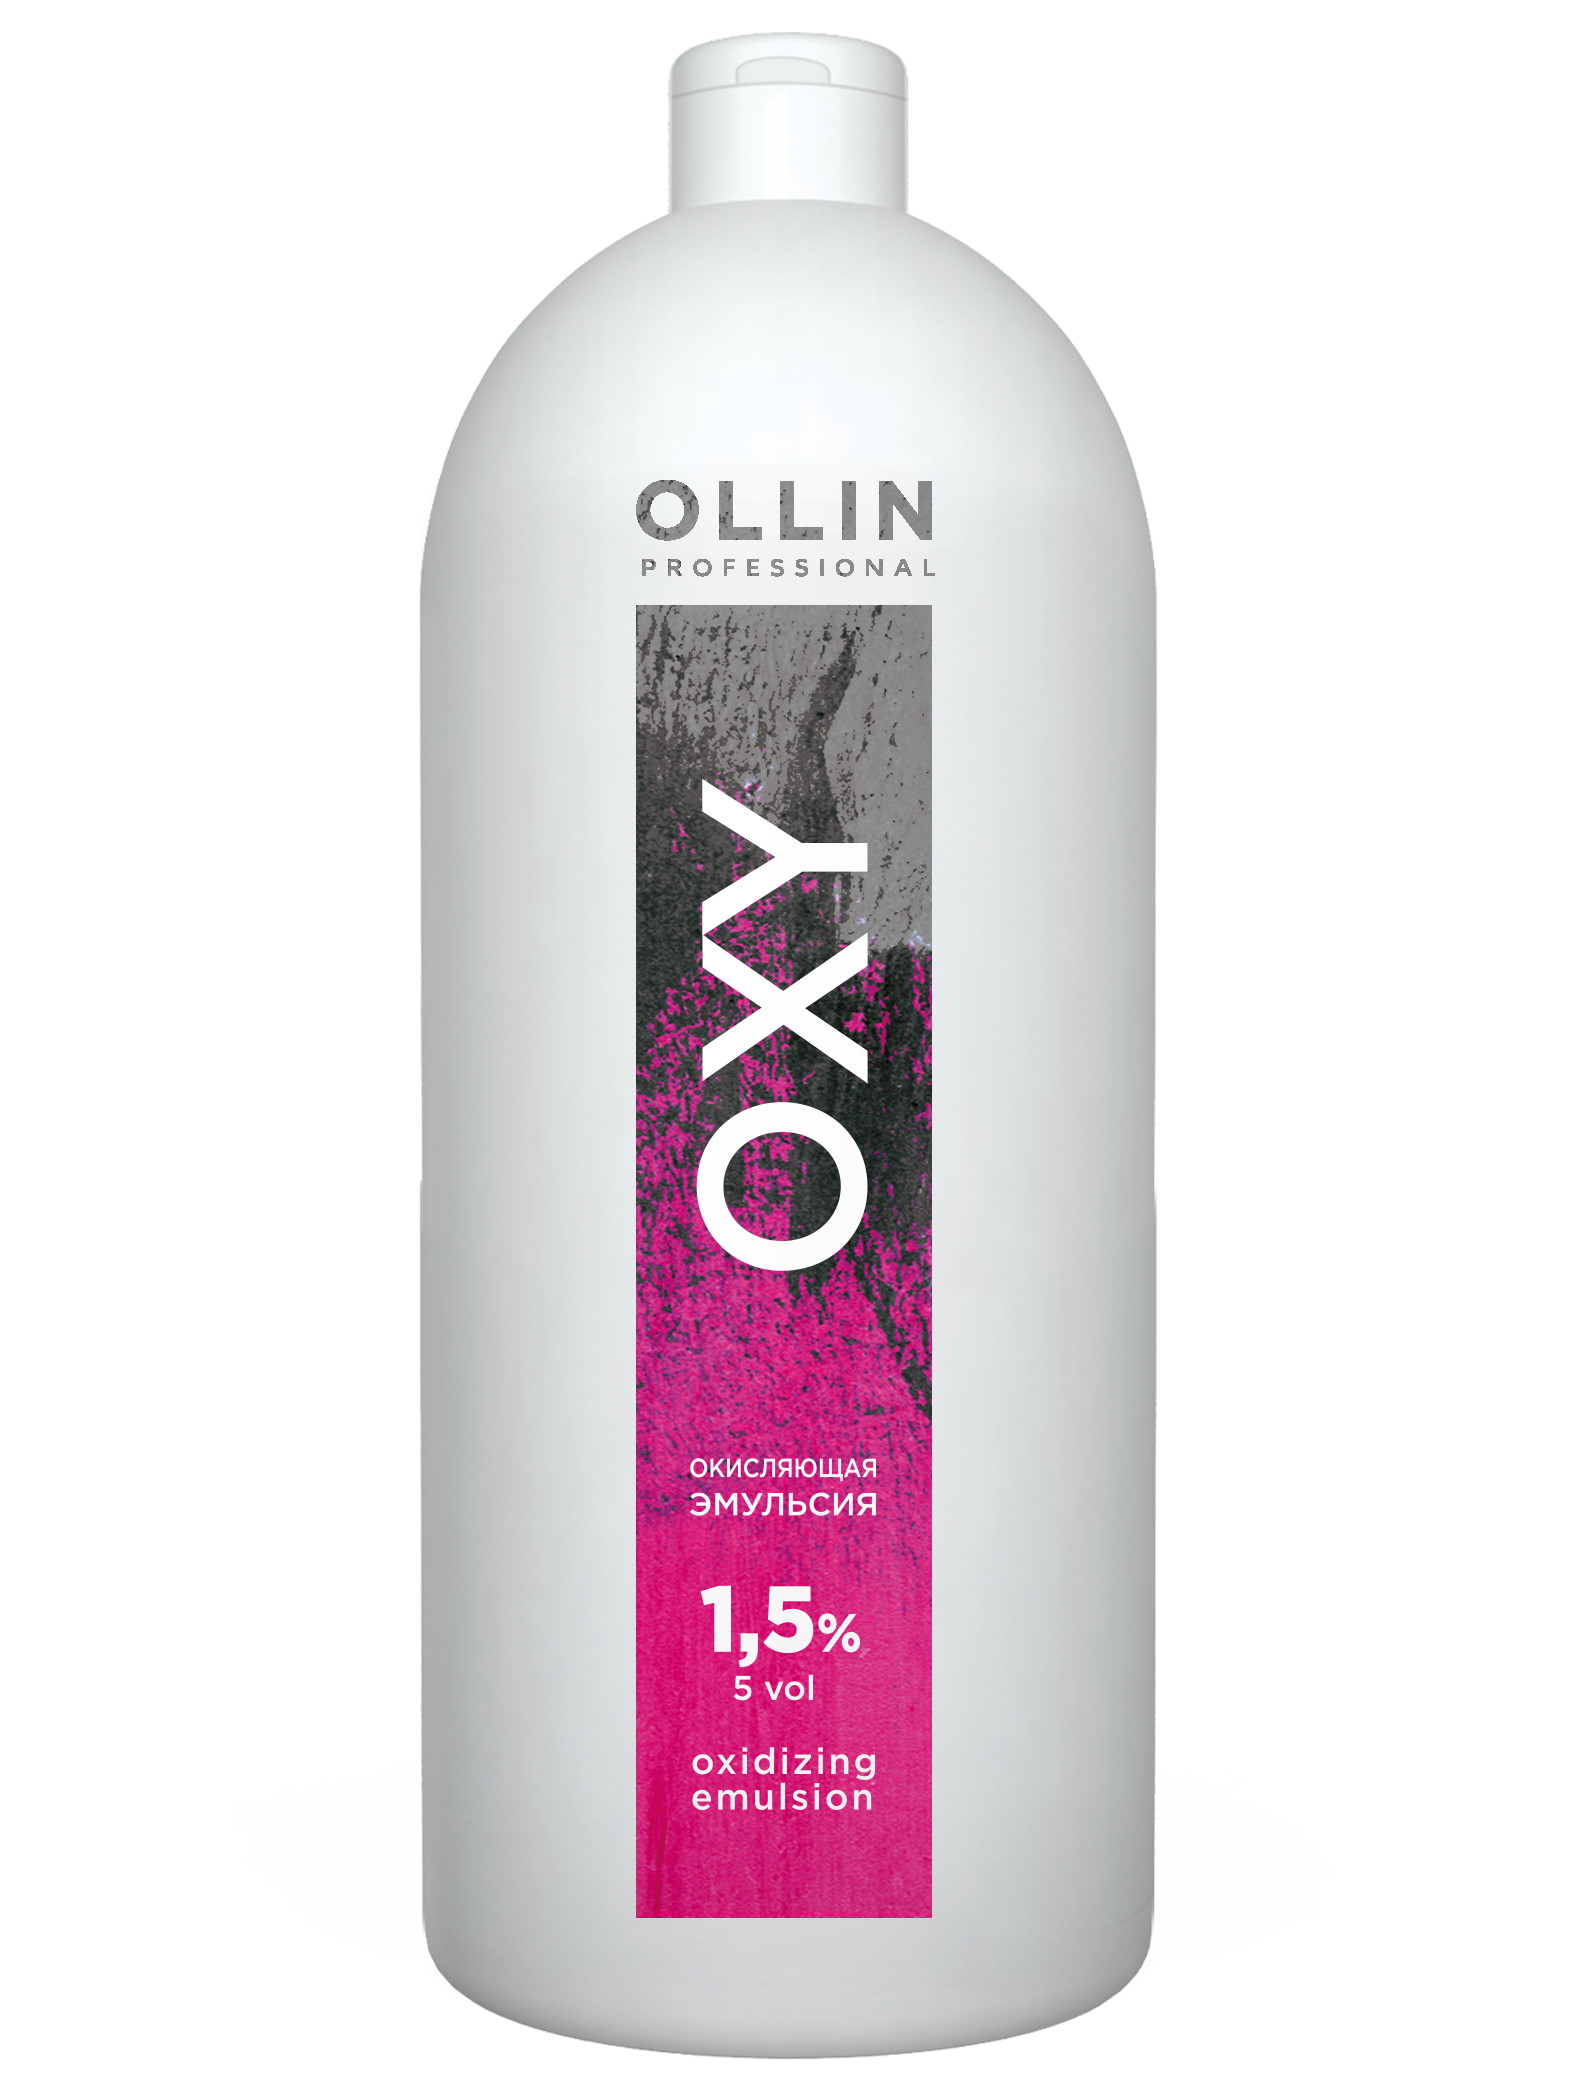 Проявитель Ollin Professional Oxy Oxidizing Emulsion 1,5% 5 vol 1000 мл проявитель londa professional londacolor 1 9% 1 л